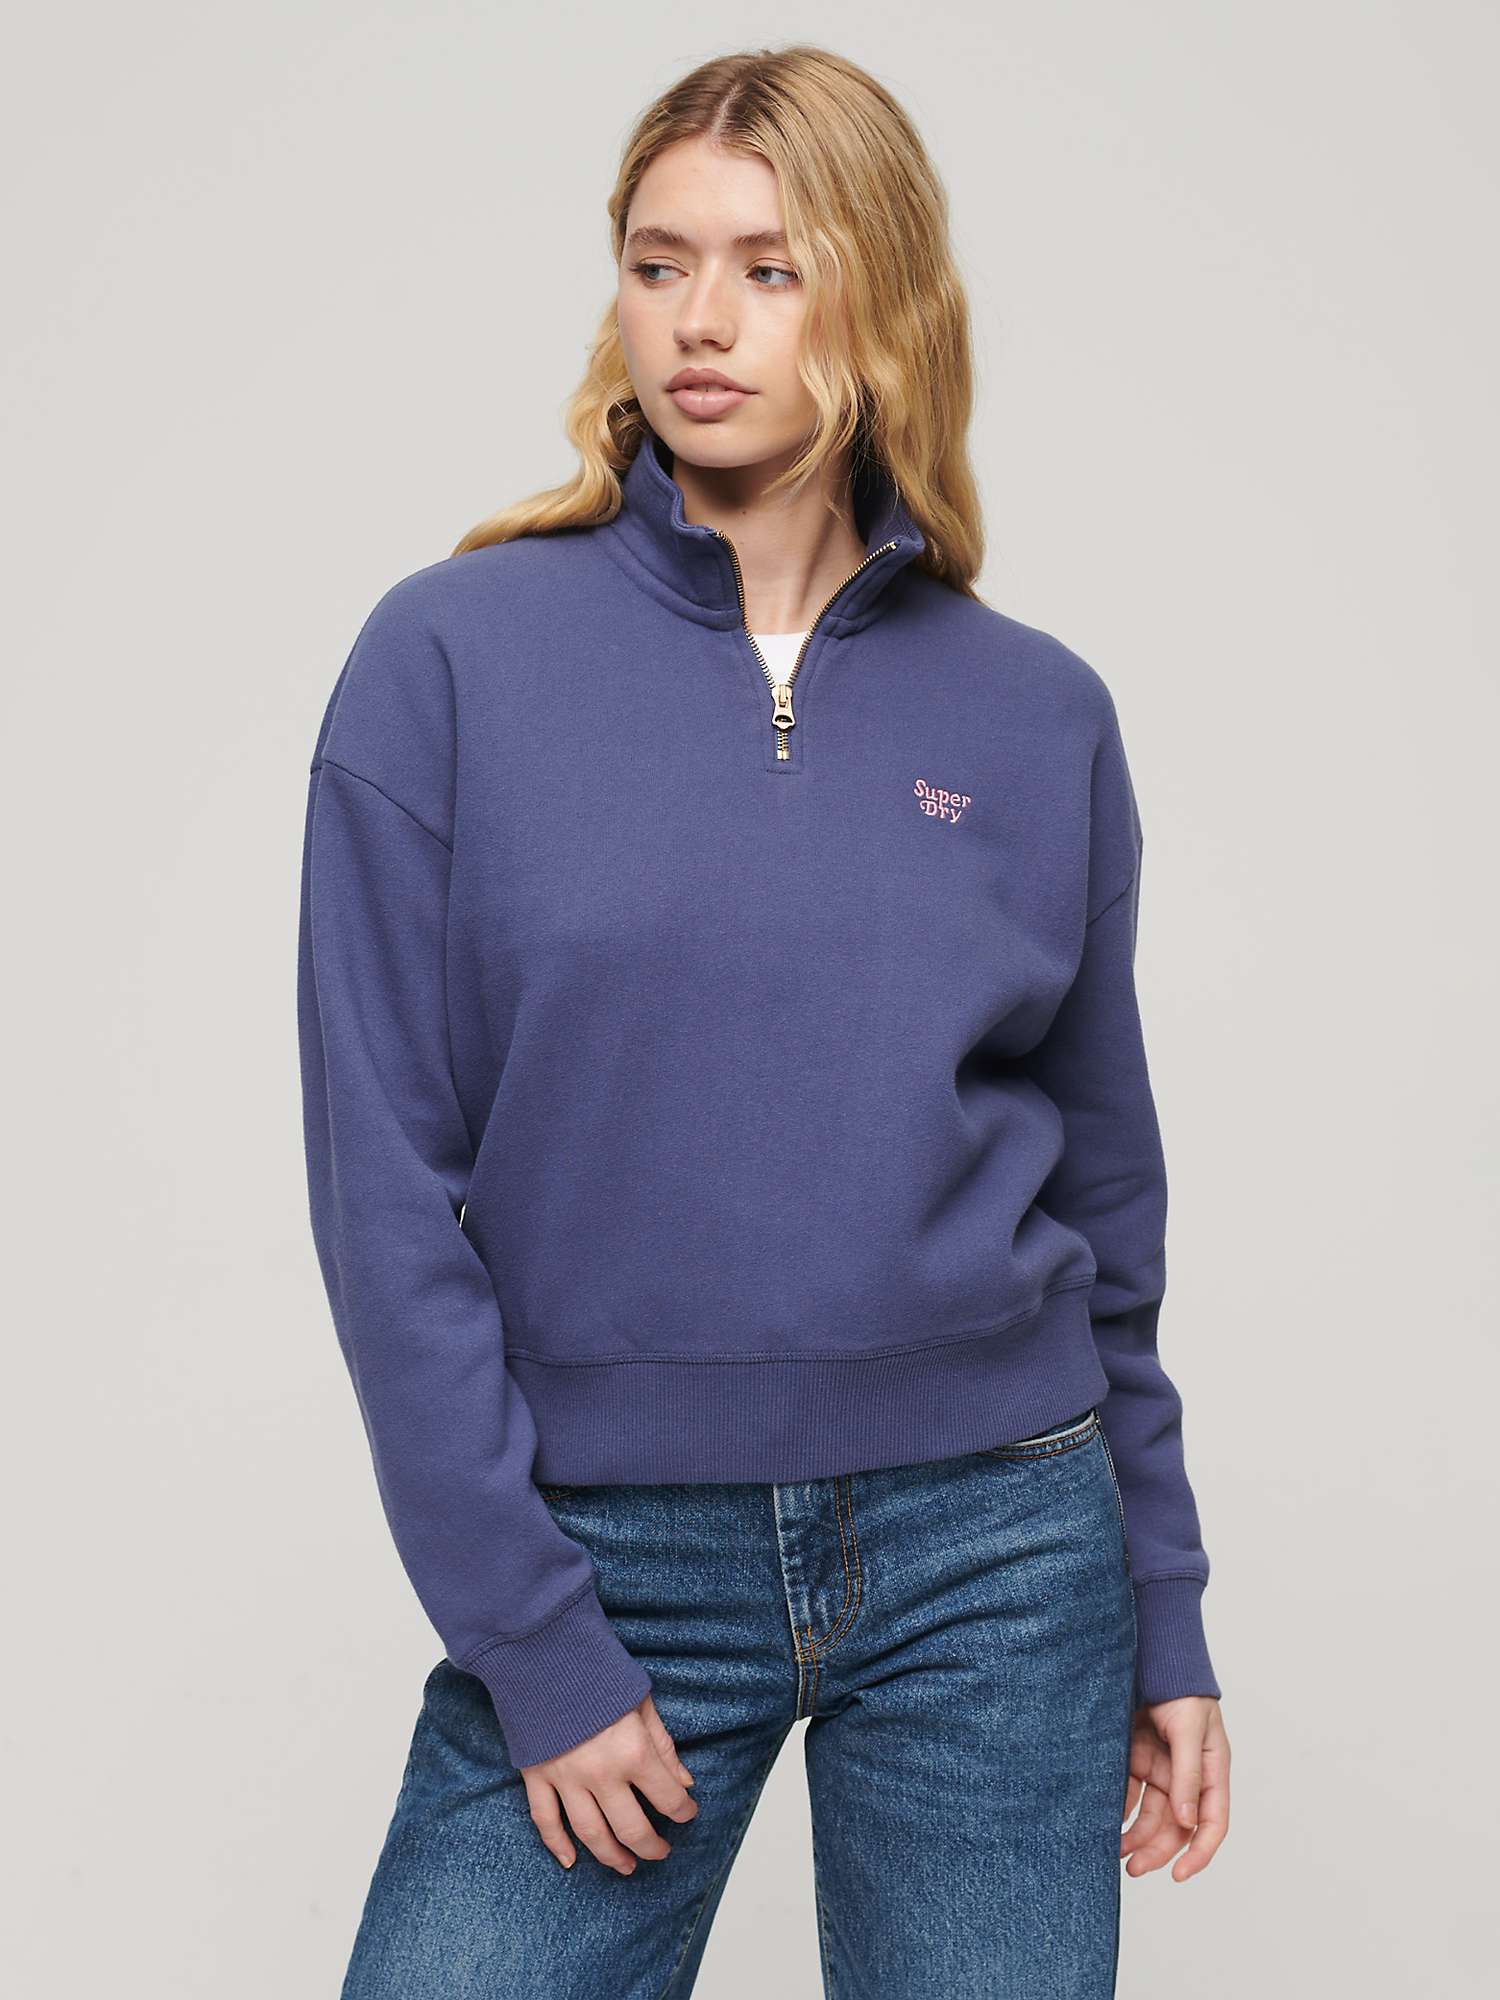 Buy Superdry Essential Half Zip Sweatshirt, Mariner Navy Online at johnlewis.com